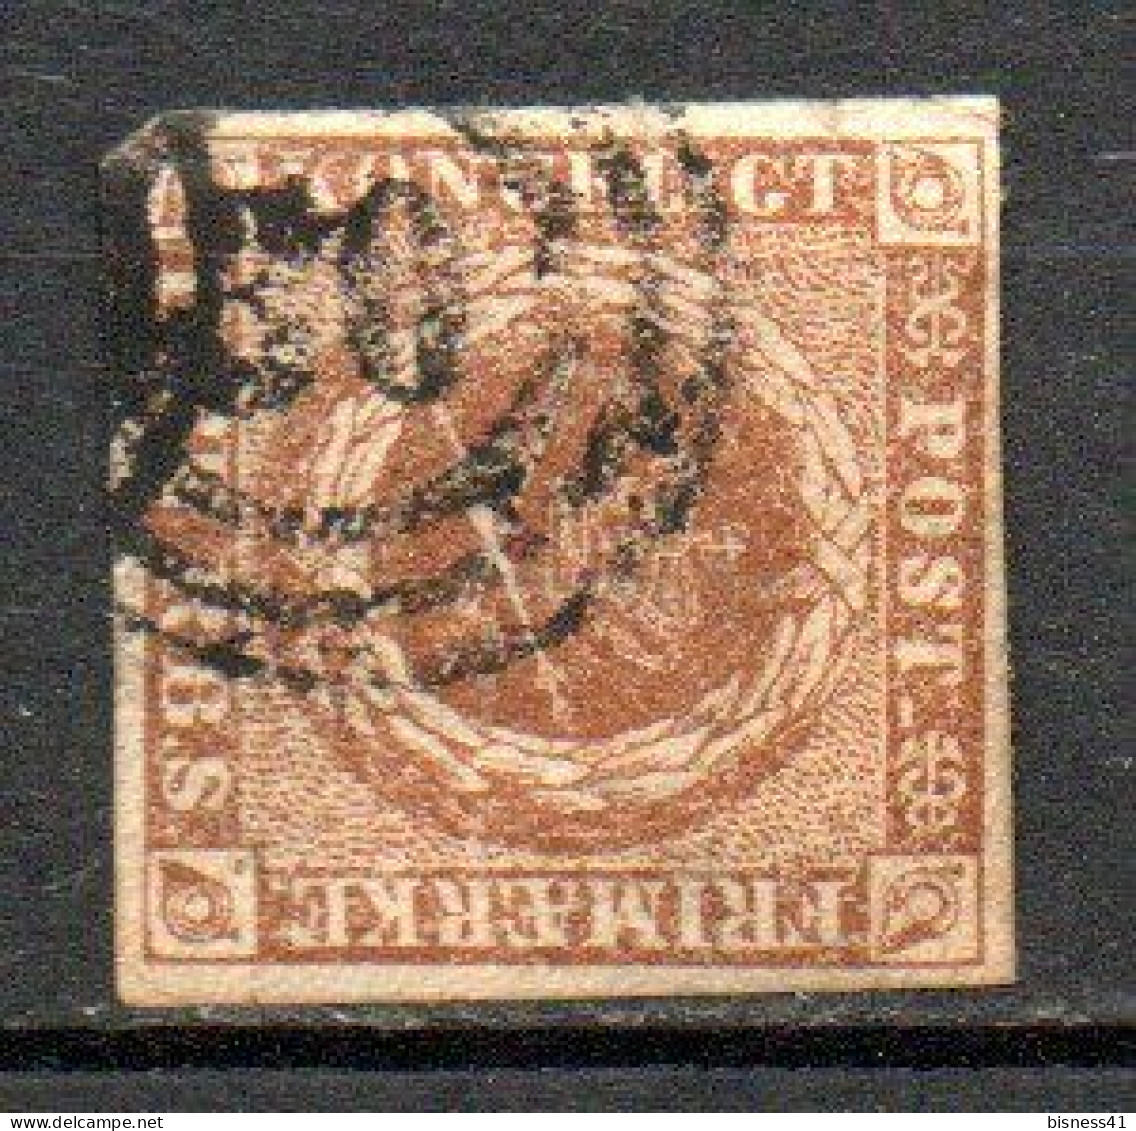 Col33 Danemark Denmark Danmark 1851 N° 2 Brun Clair (1854)  Oblitéré Cote : 100,00€ - Used Stamps